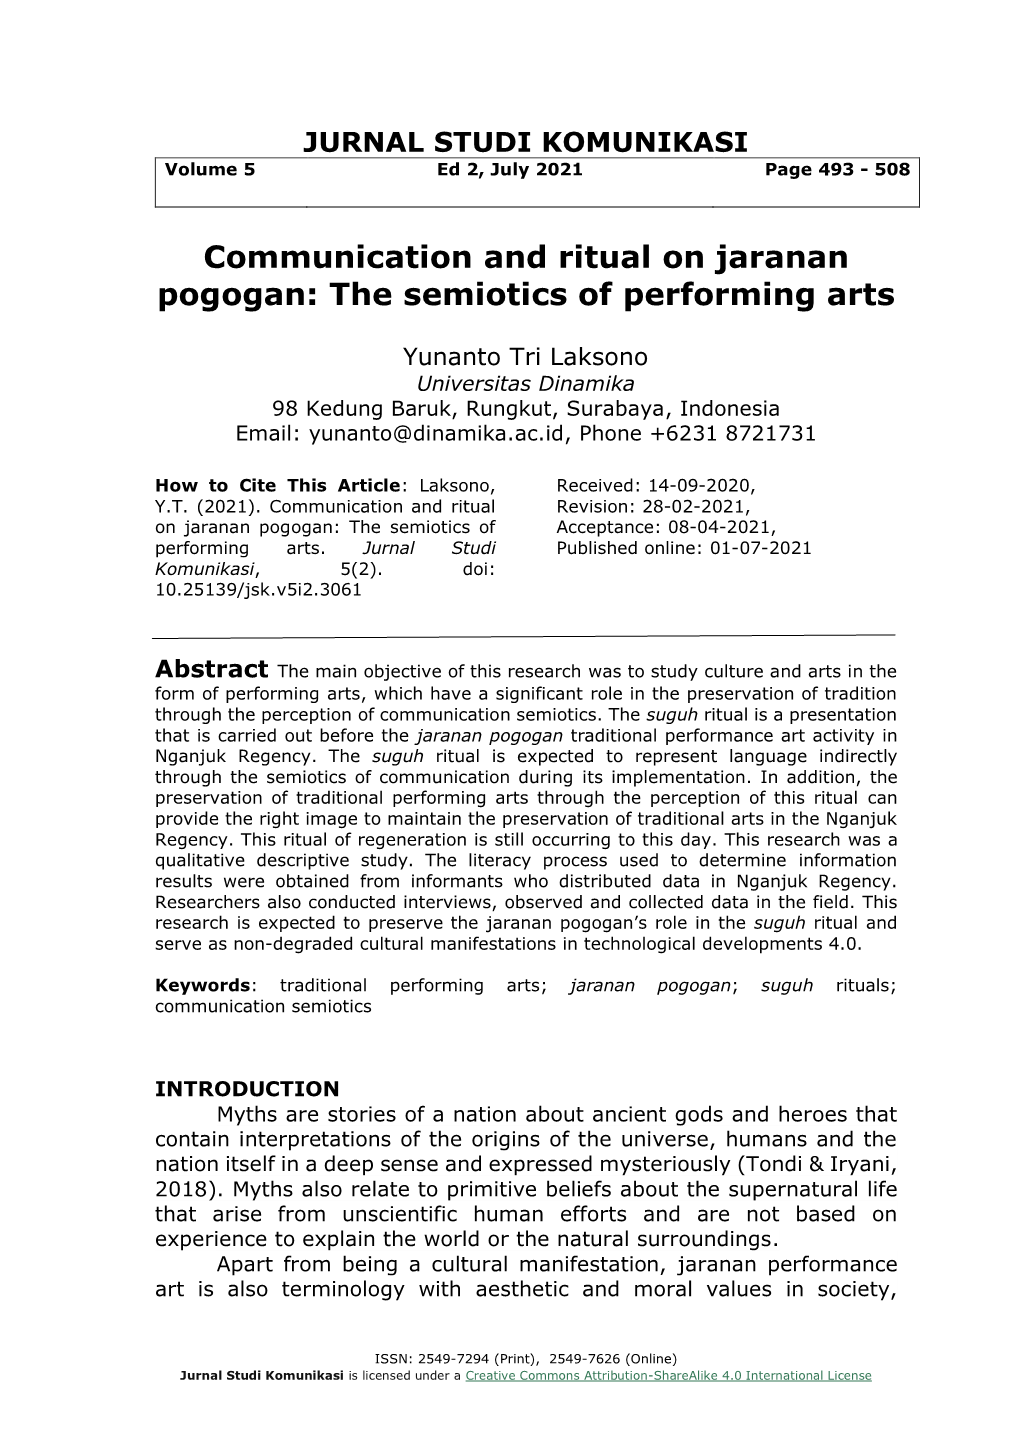 Communication and Ritual on Jaranan Pogogan: the Semiotics of Performing Arts